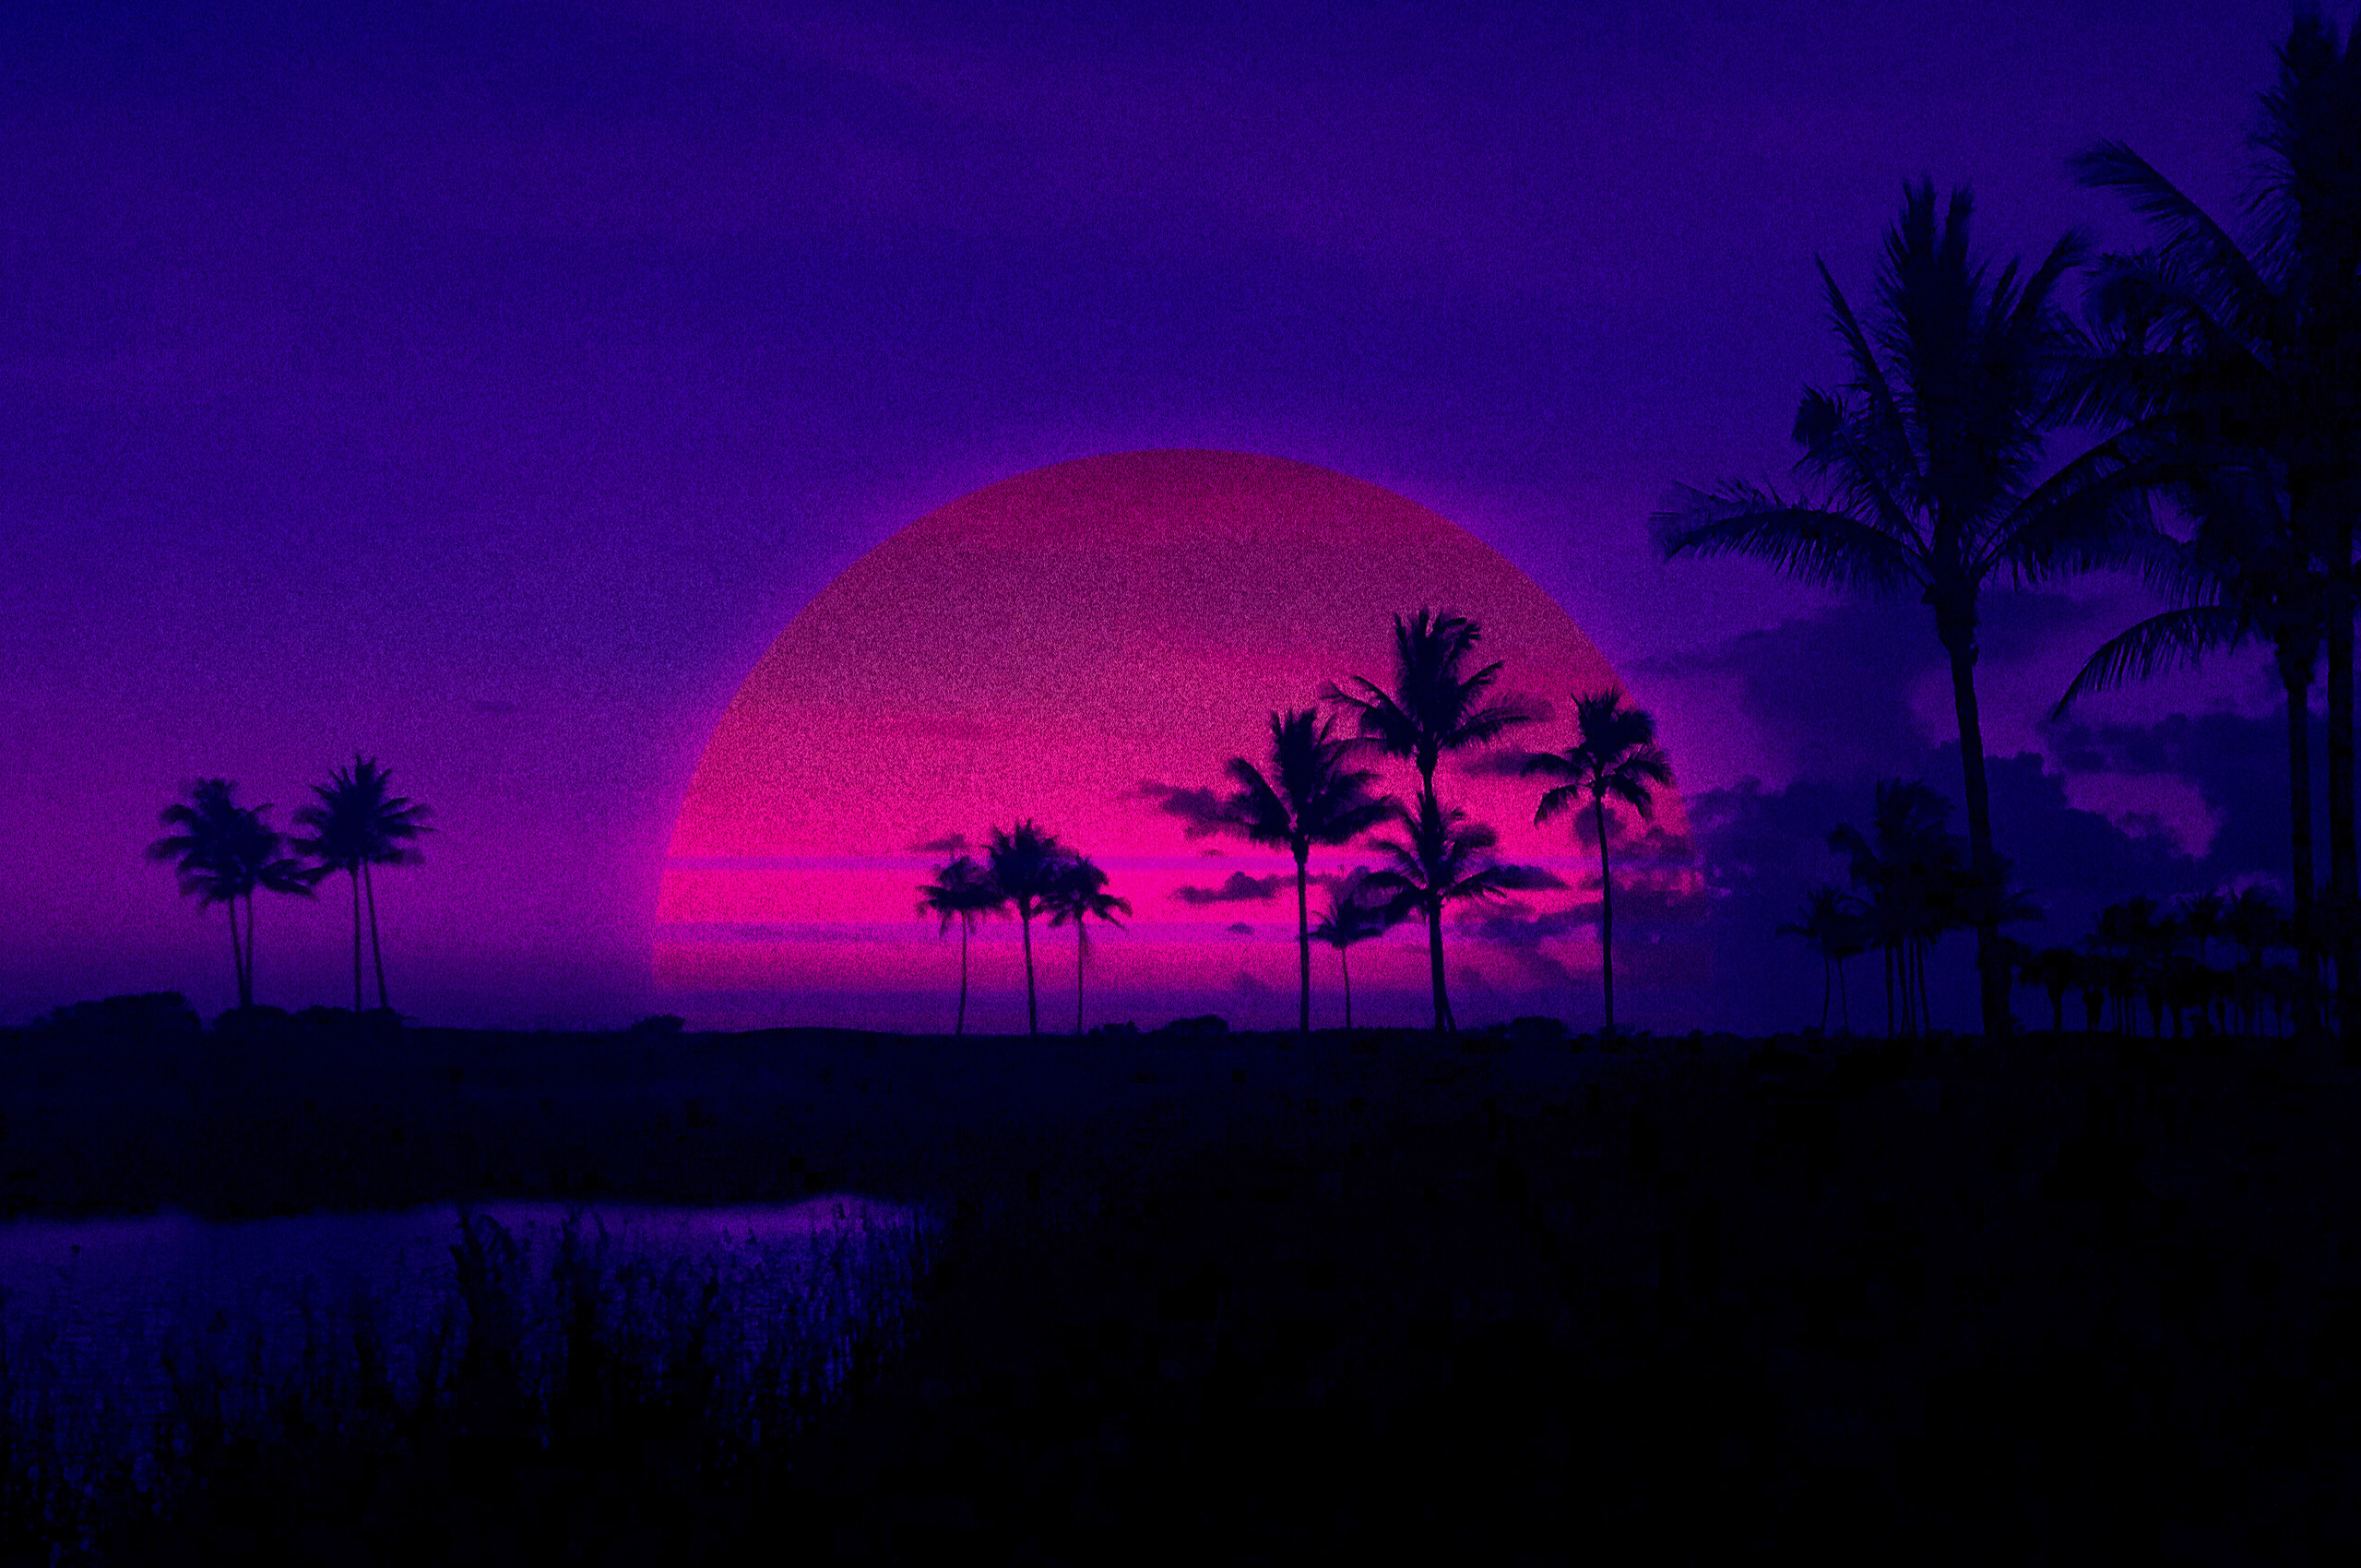 Sunset silhouette иллюстрации стим фото 55